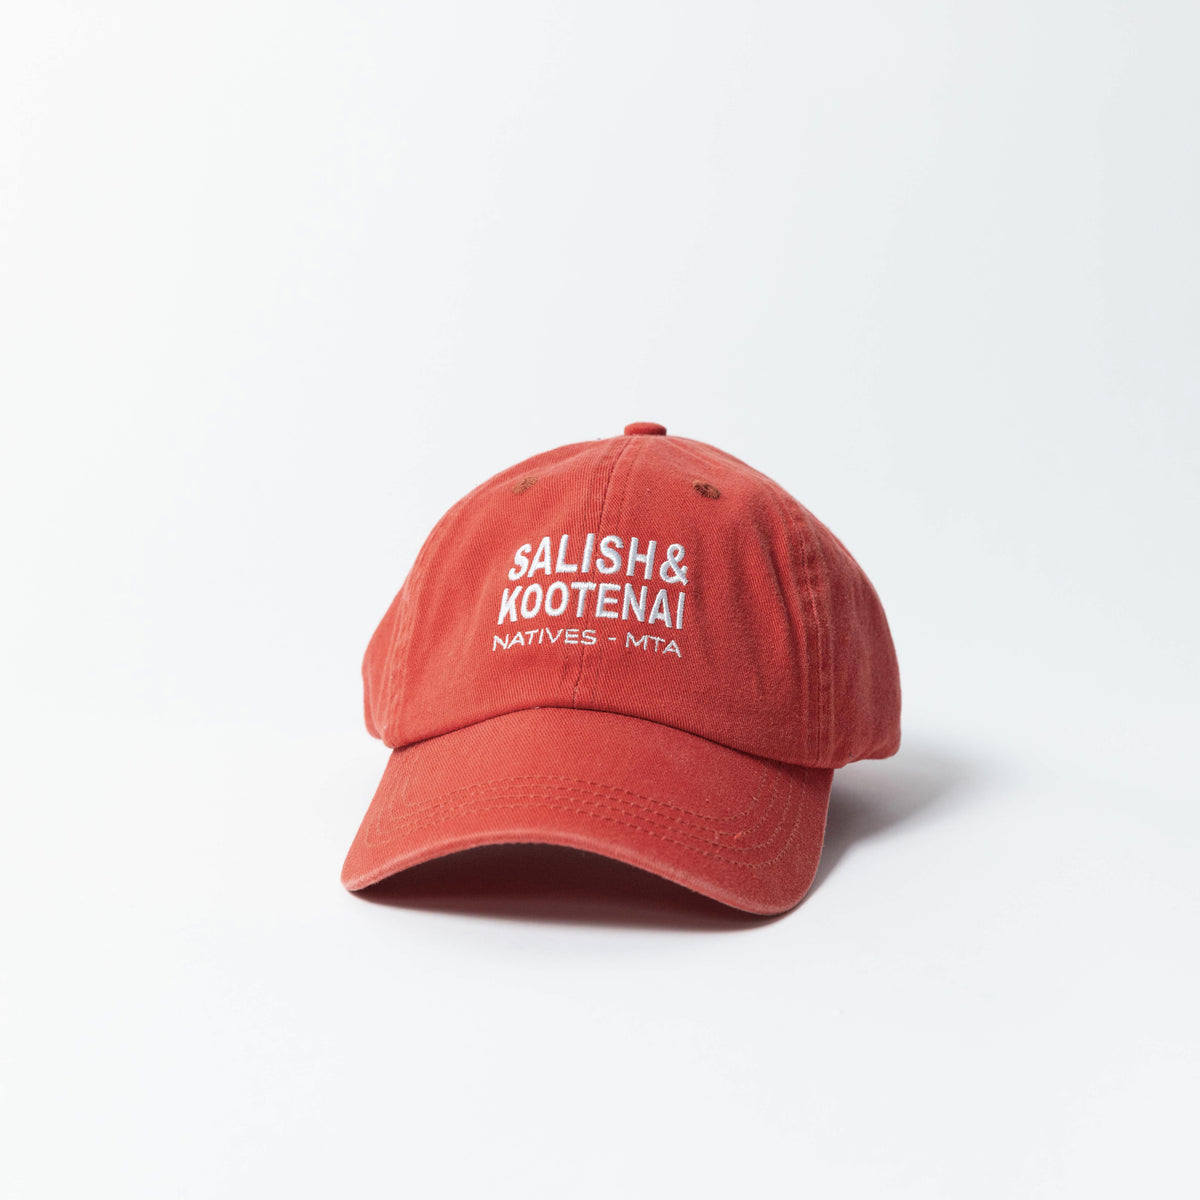 MTA - قبعة جاهزة